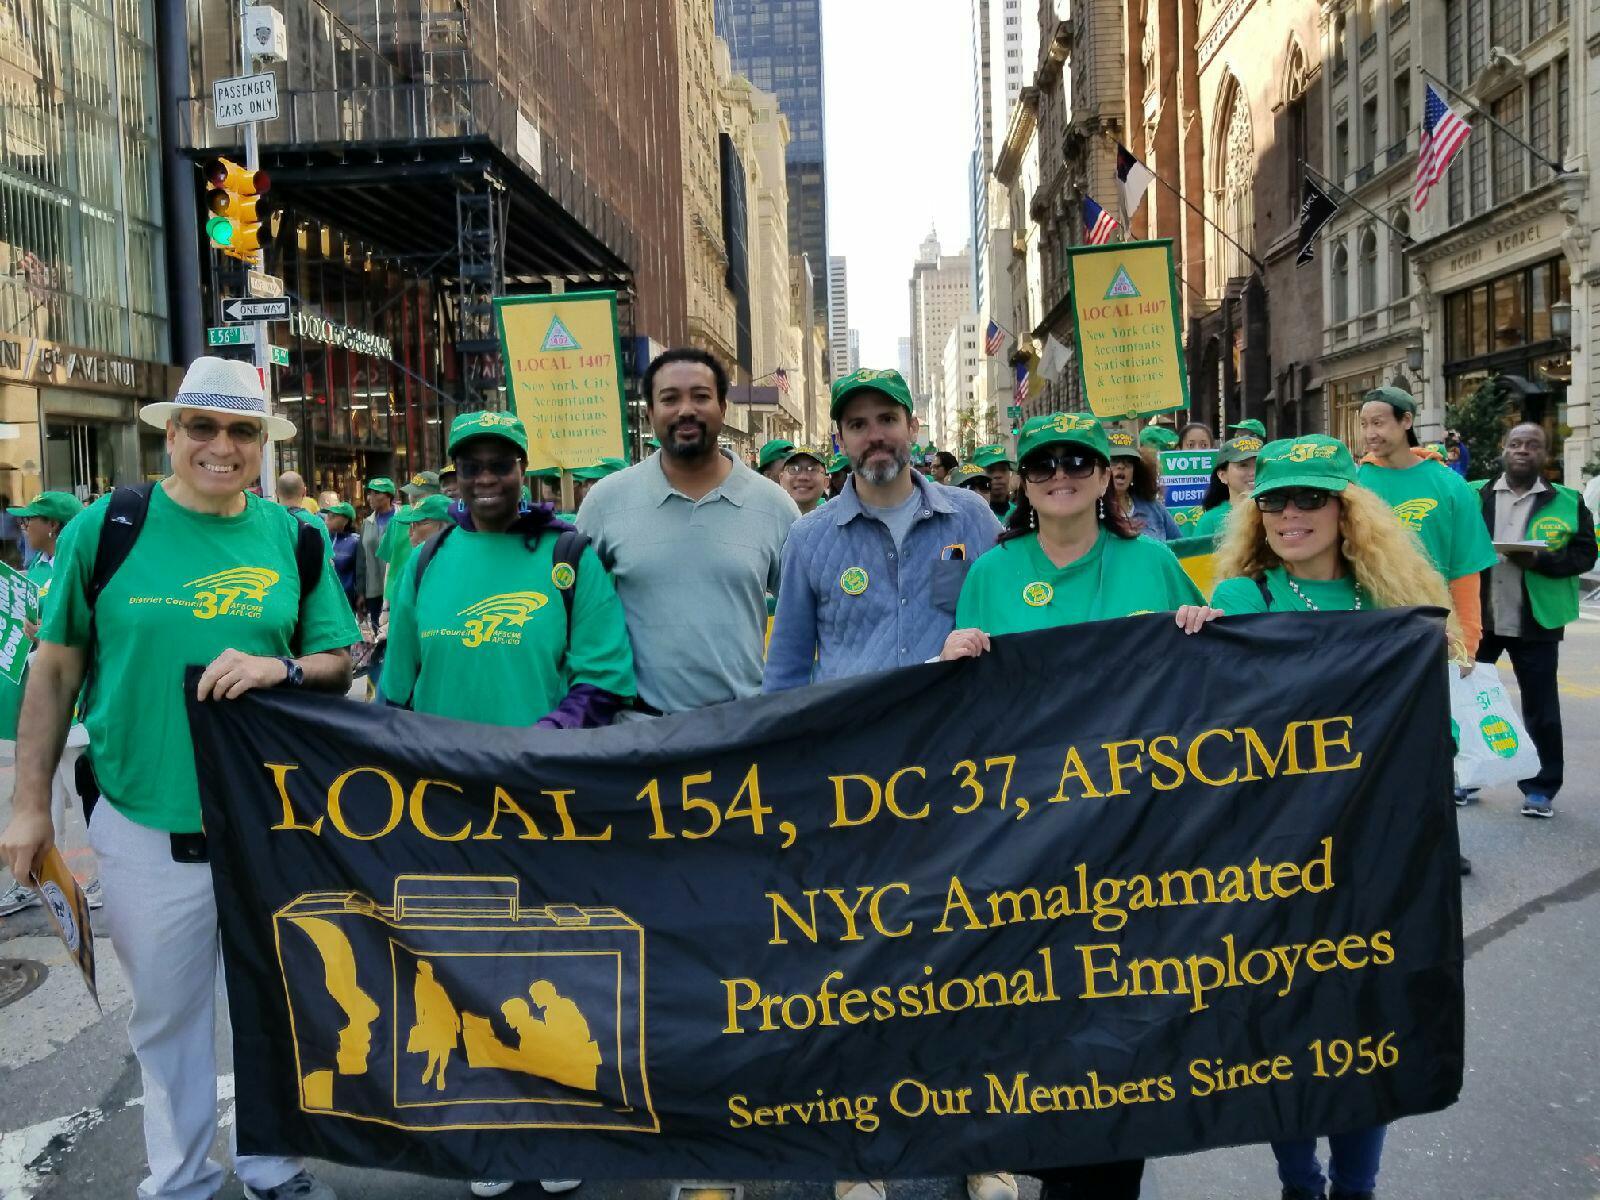 Labor Day Parade / Photos Local 154 NYC Amalgamated Professional